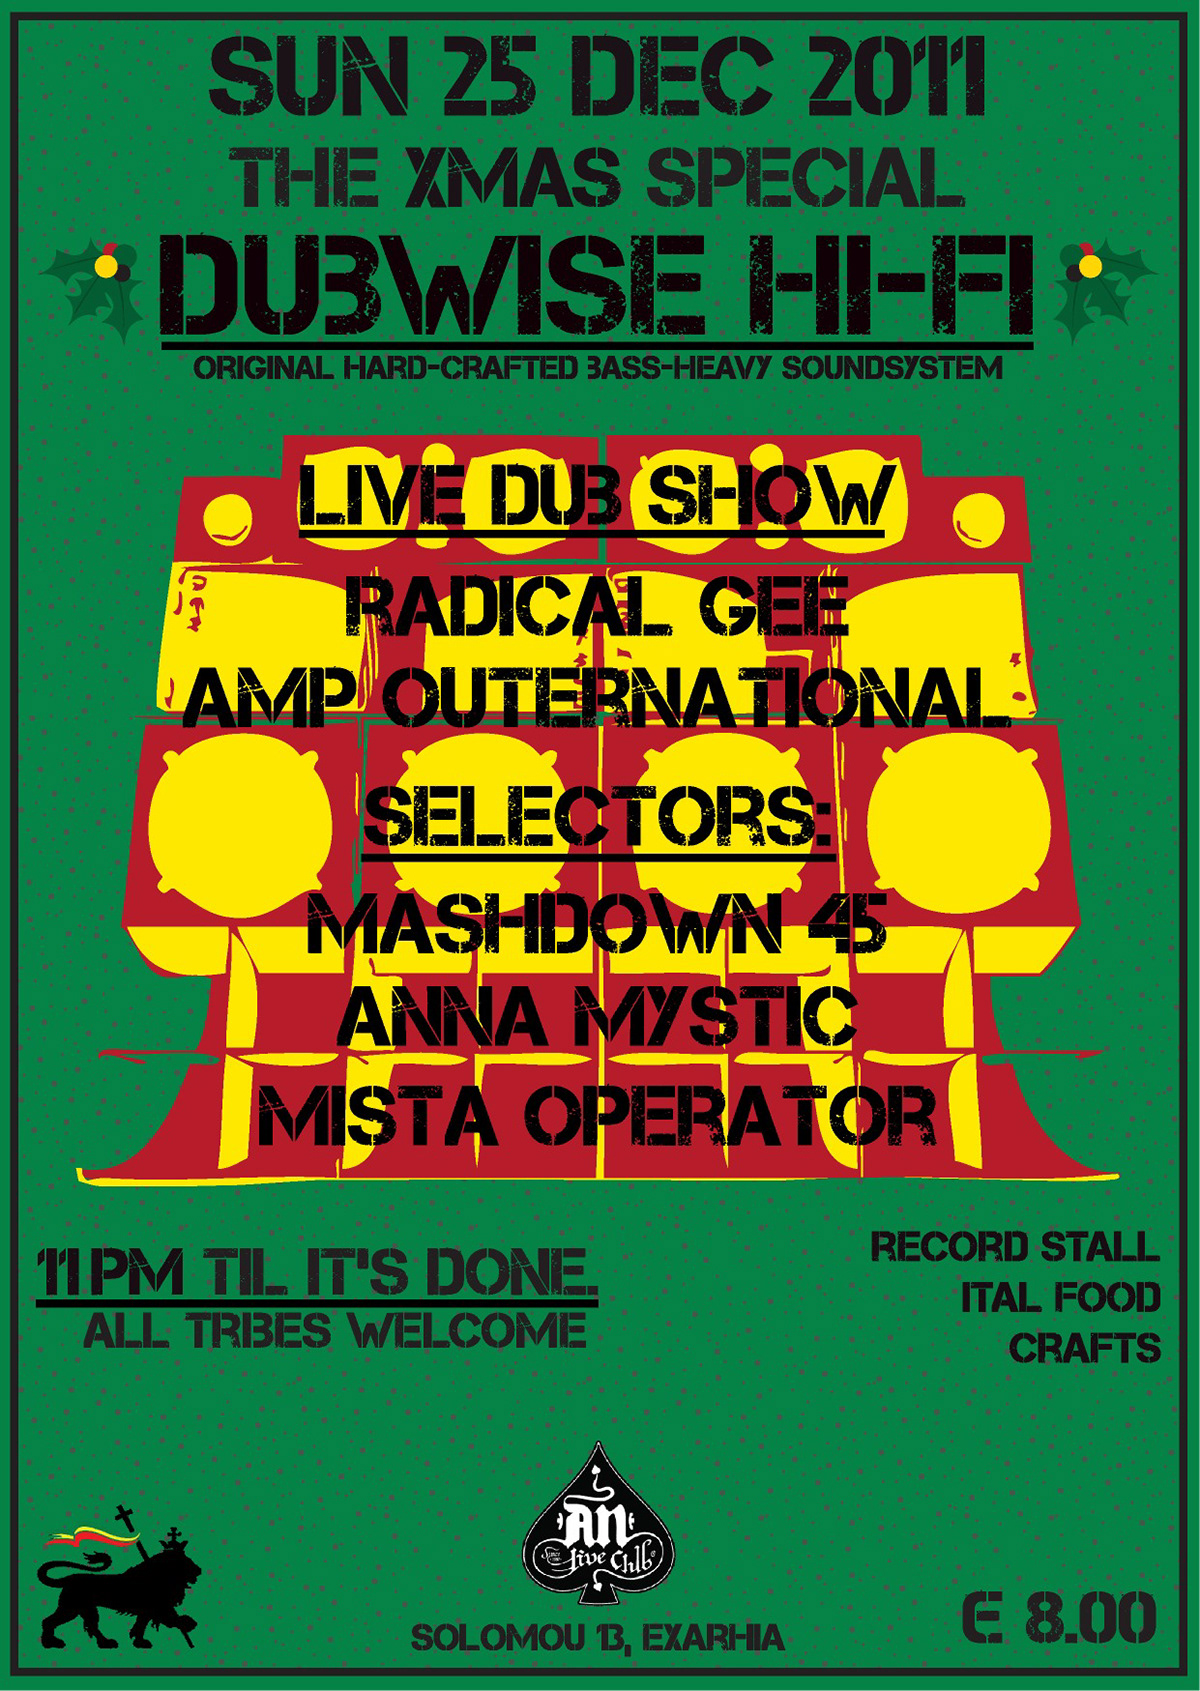 Dubwise Hi-fi